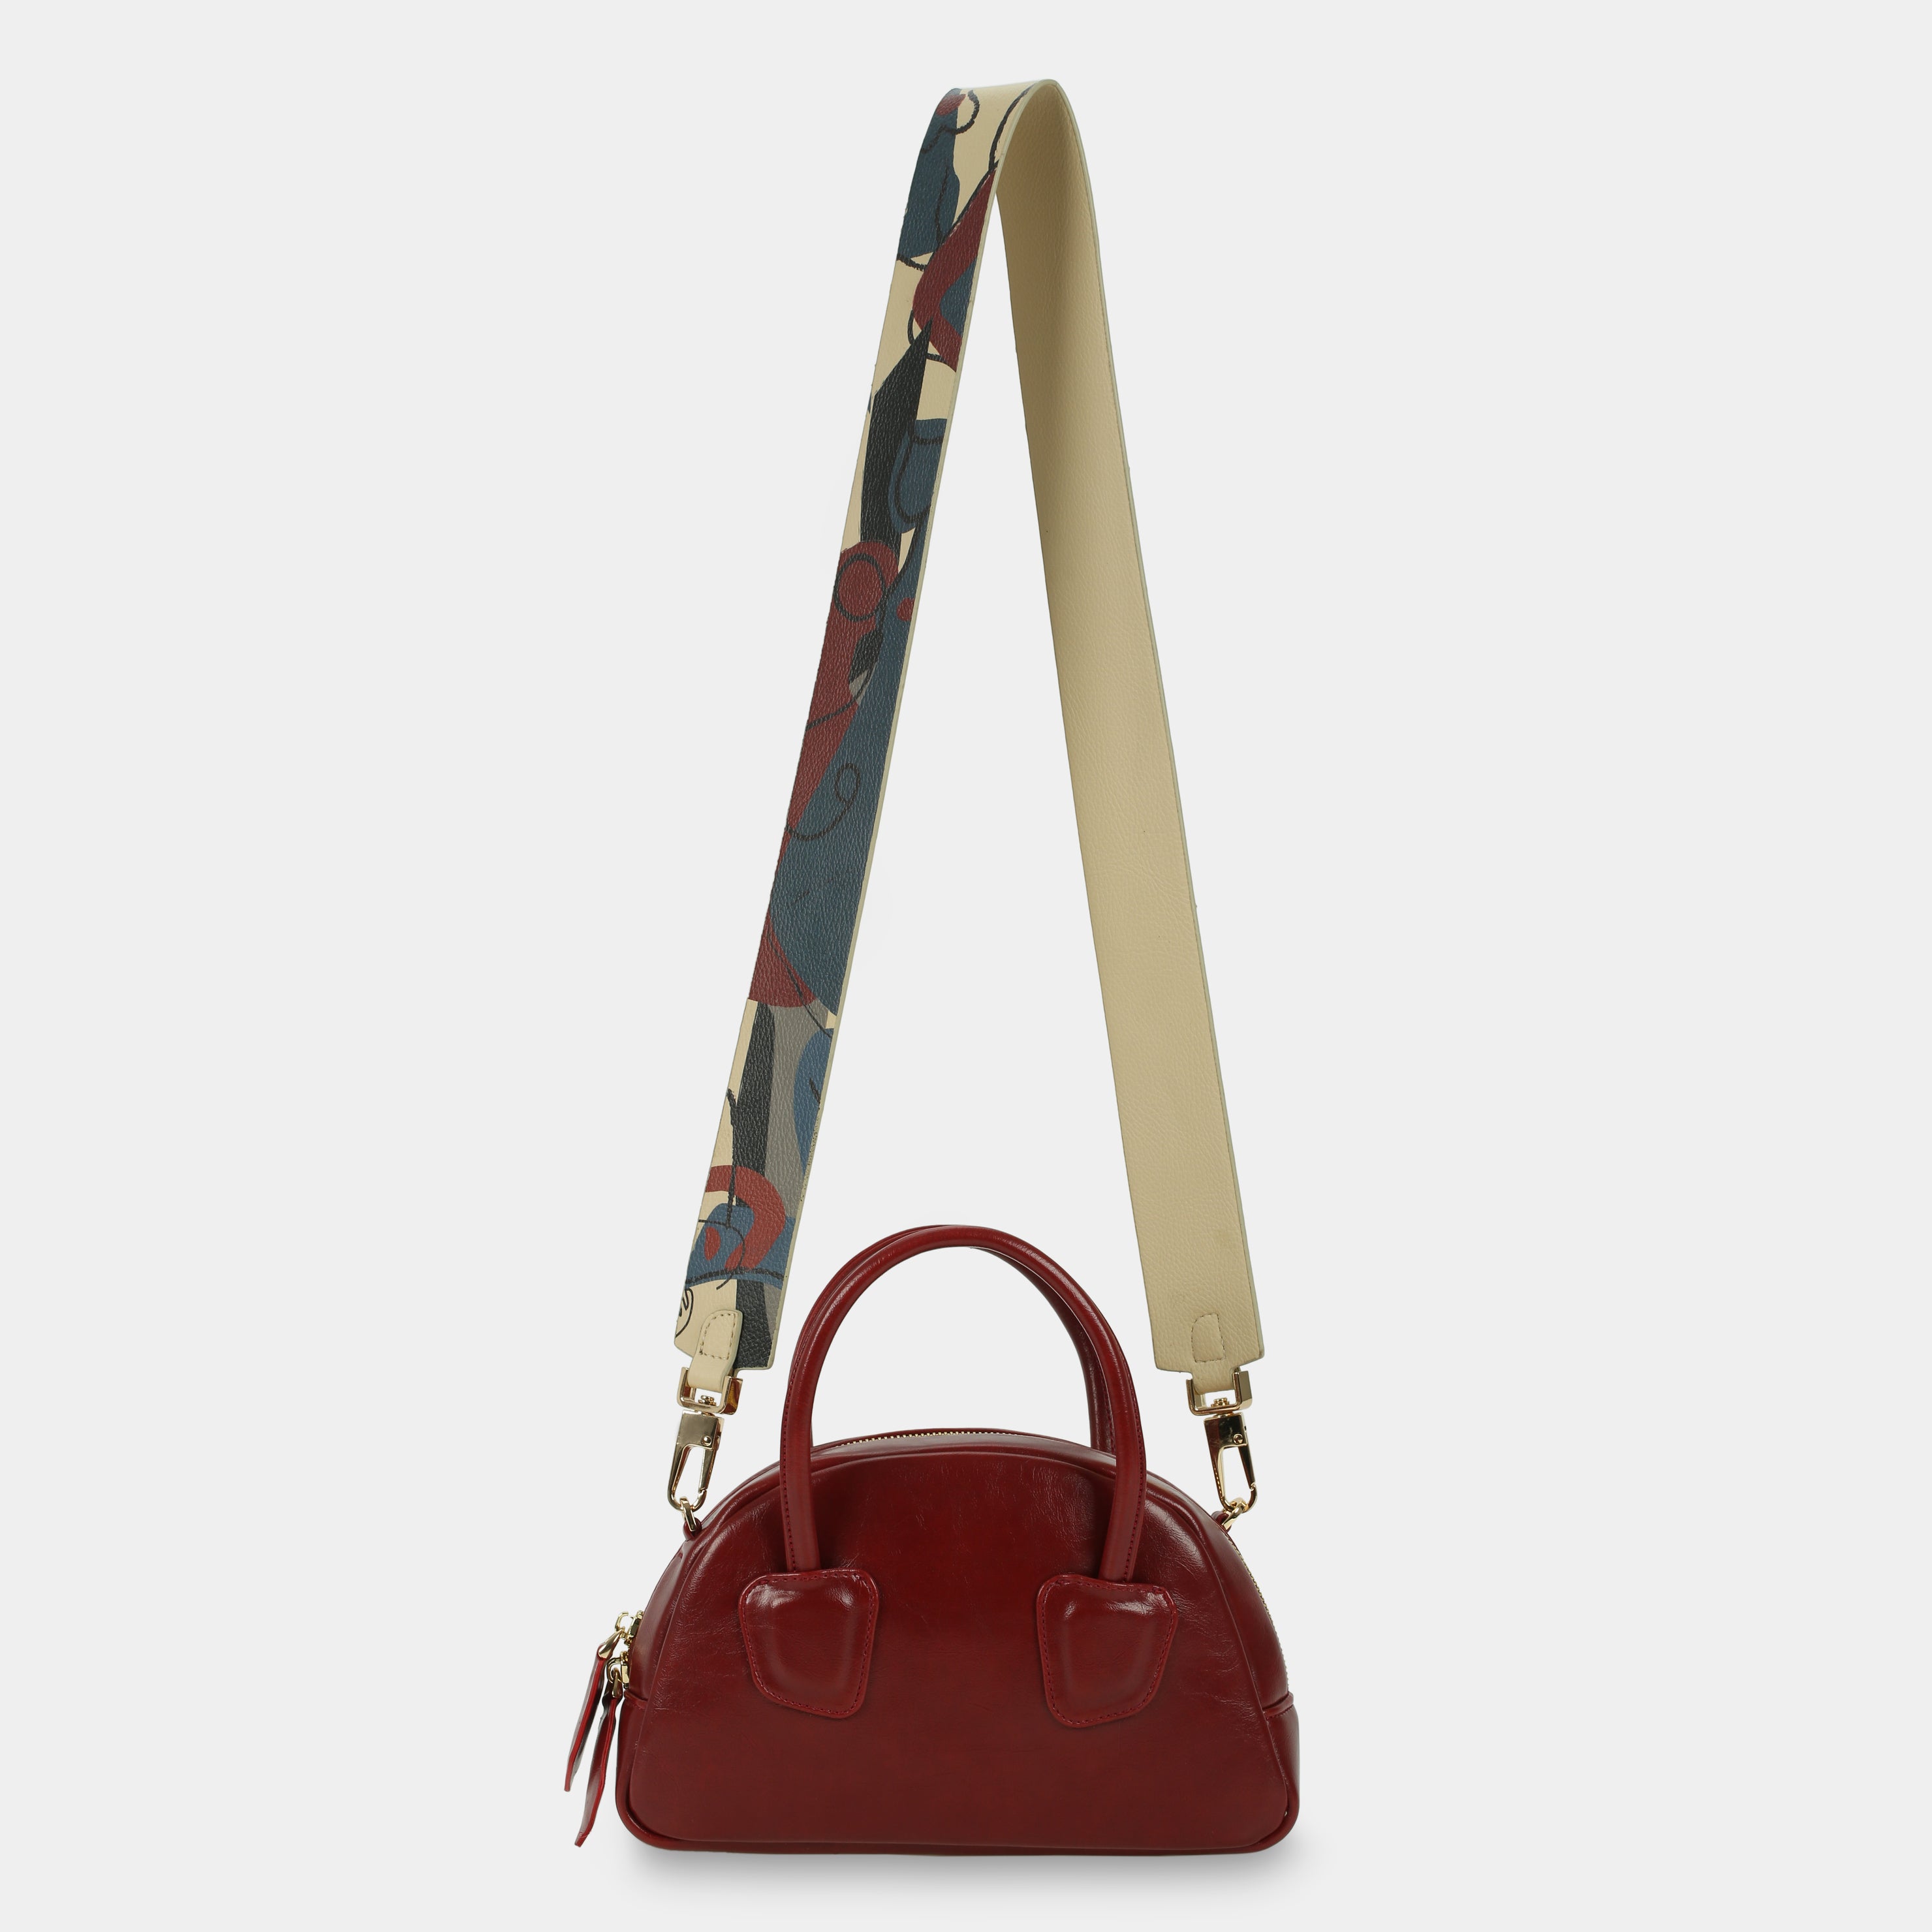 TACOS Handbag in Dark Red color large size (M)